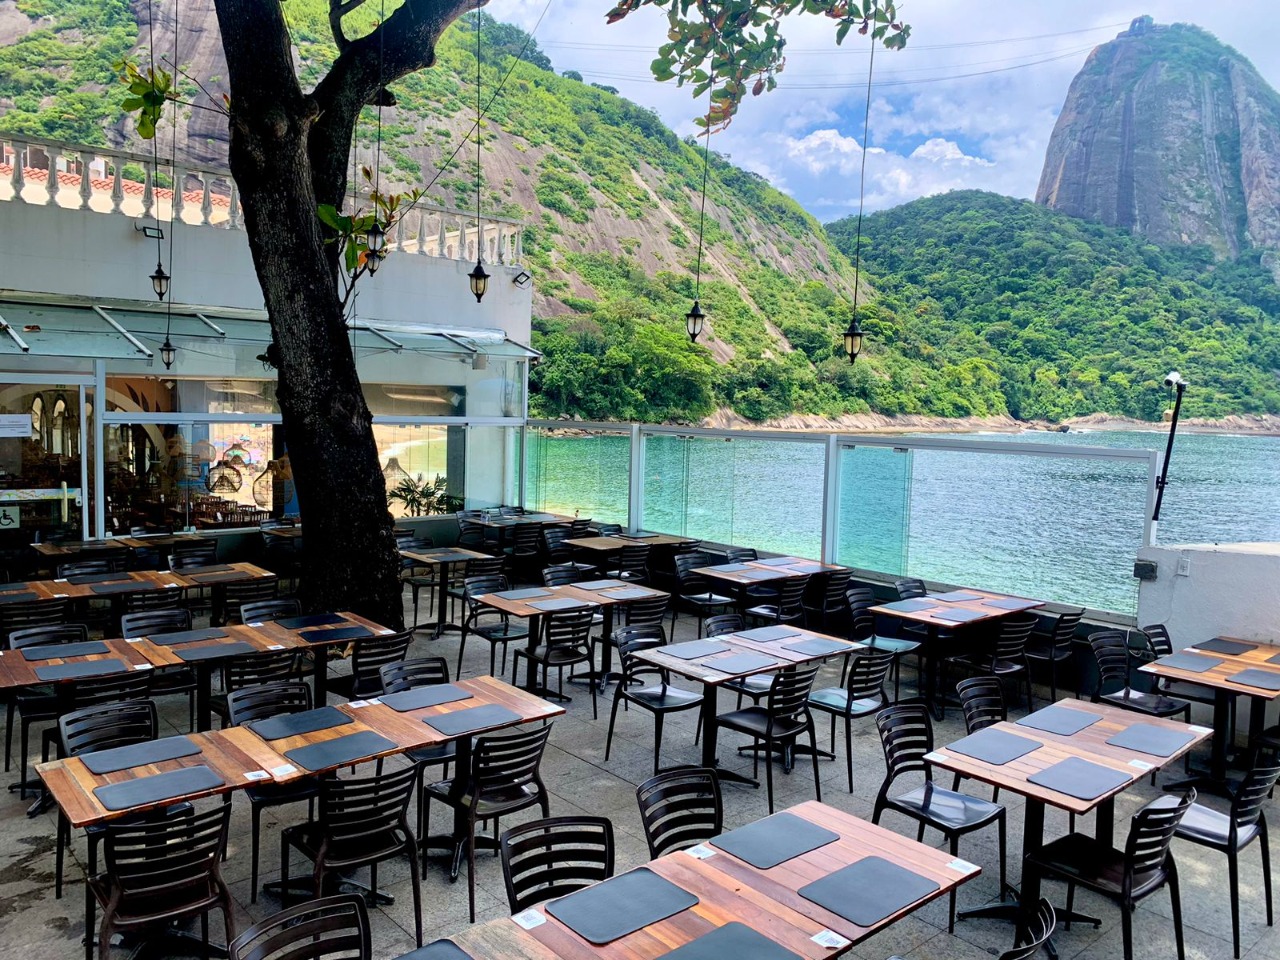 Restaurante Terra Brasilis